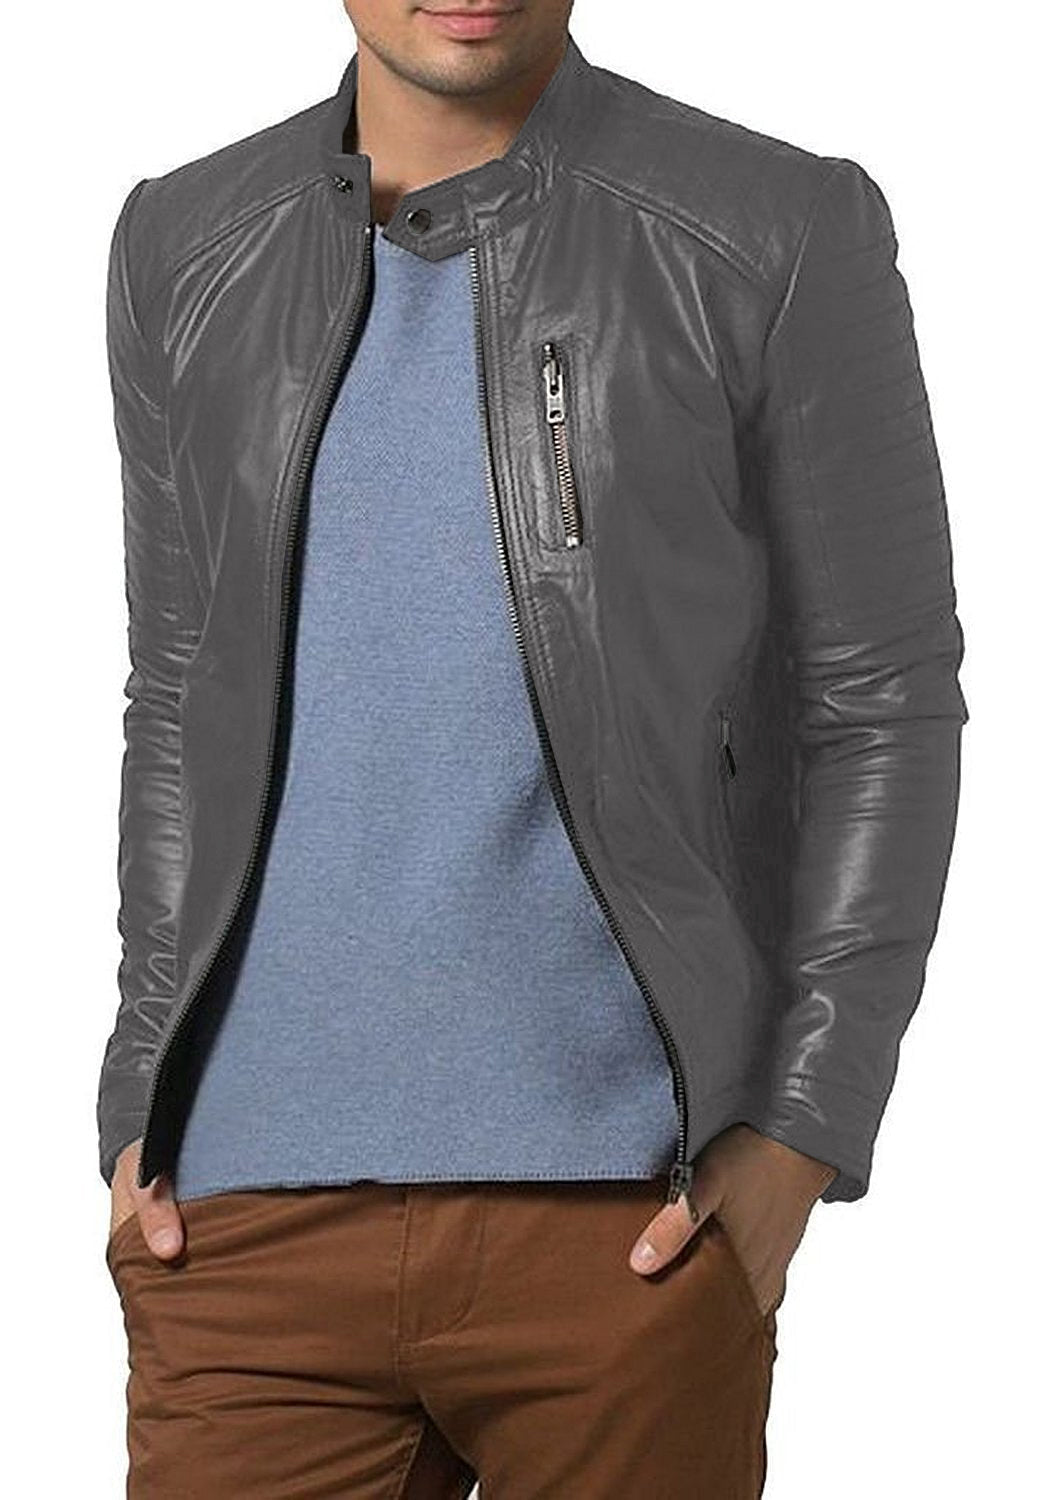 Leather Jackets Hub Mens Genuine Lambskin Leather Jacket (Black, Racer Jacket) - 1501193